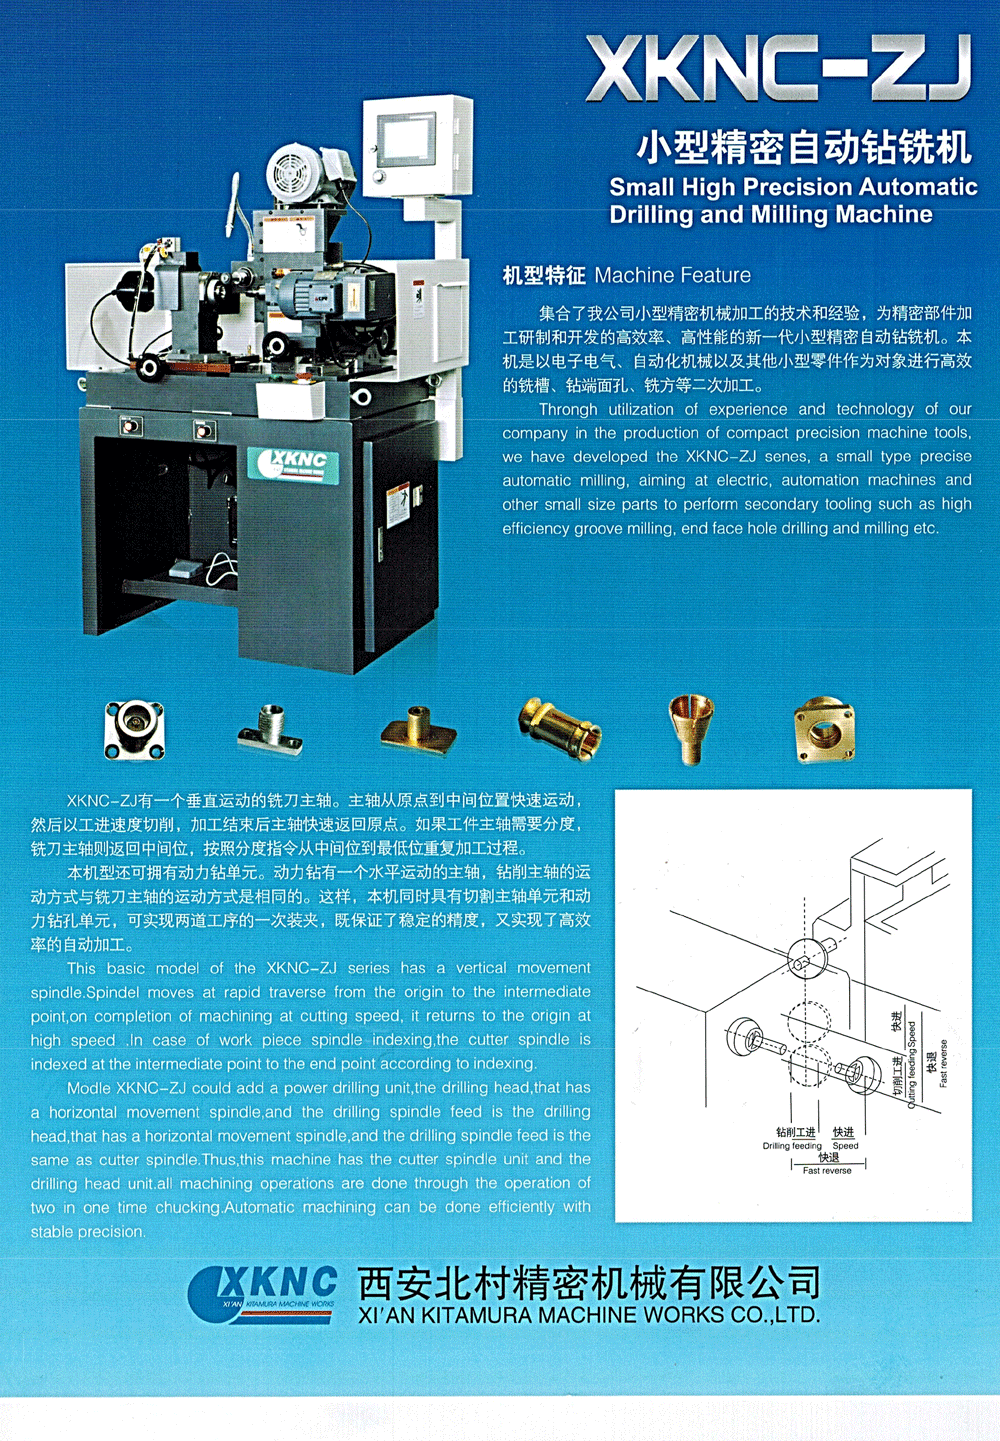 XKNC-ZJ小型精密自动钻铣机